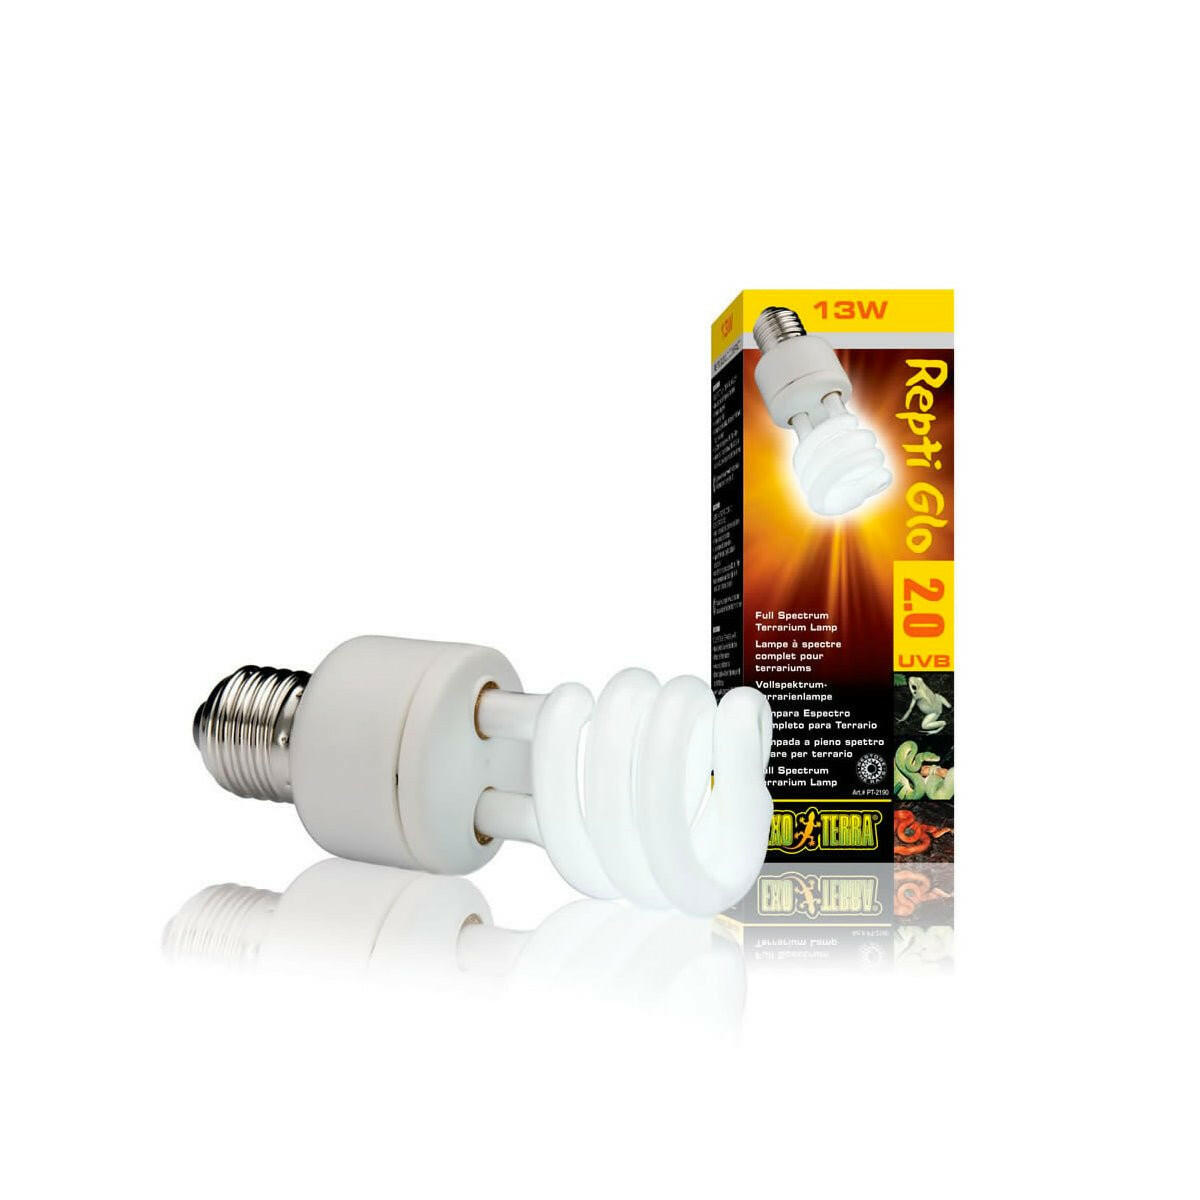 Exo Terra Natural Light Compact Lamp 13W - Charterhouse Aquatics